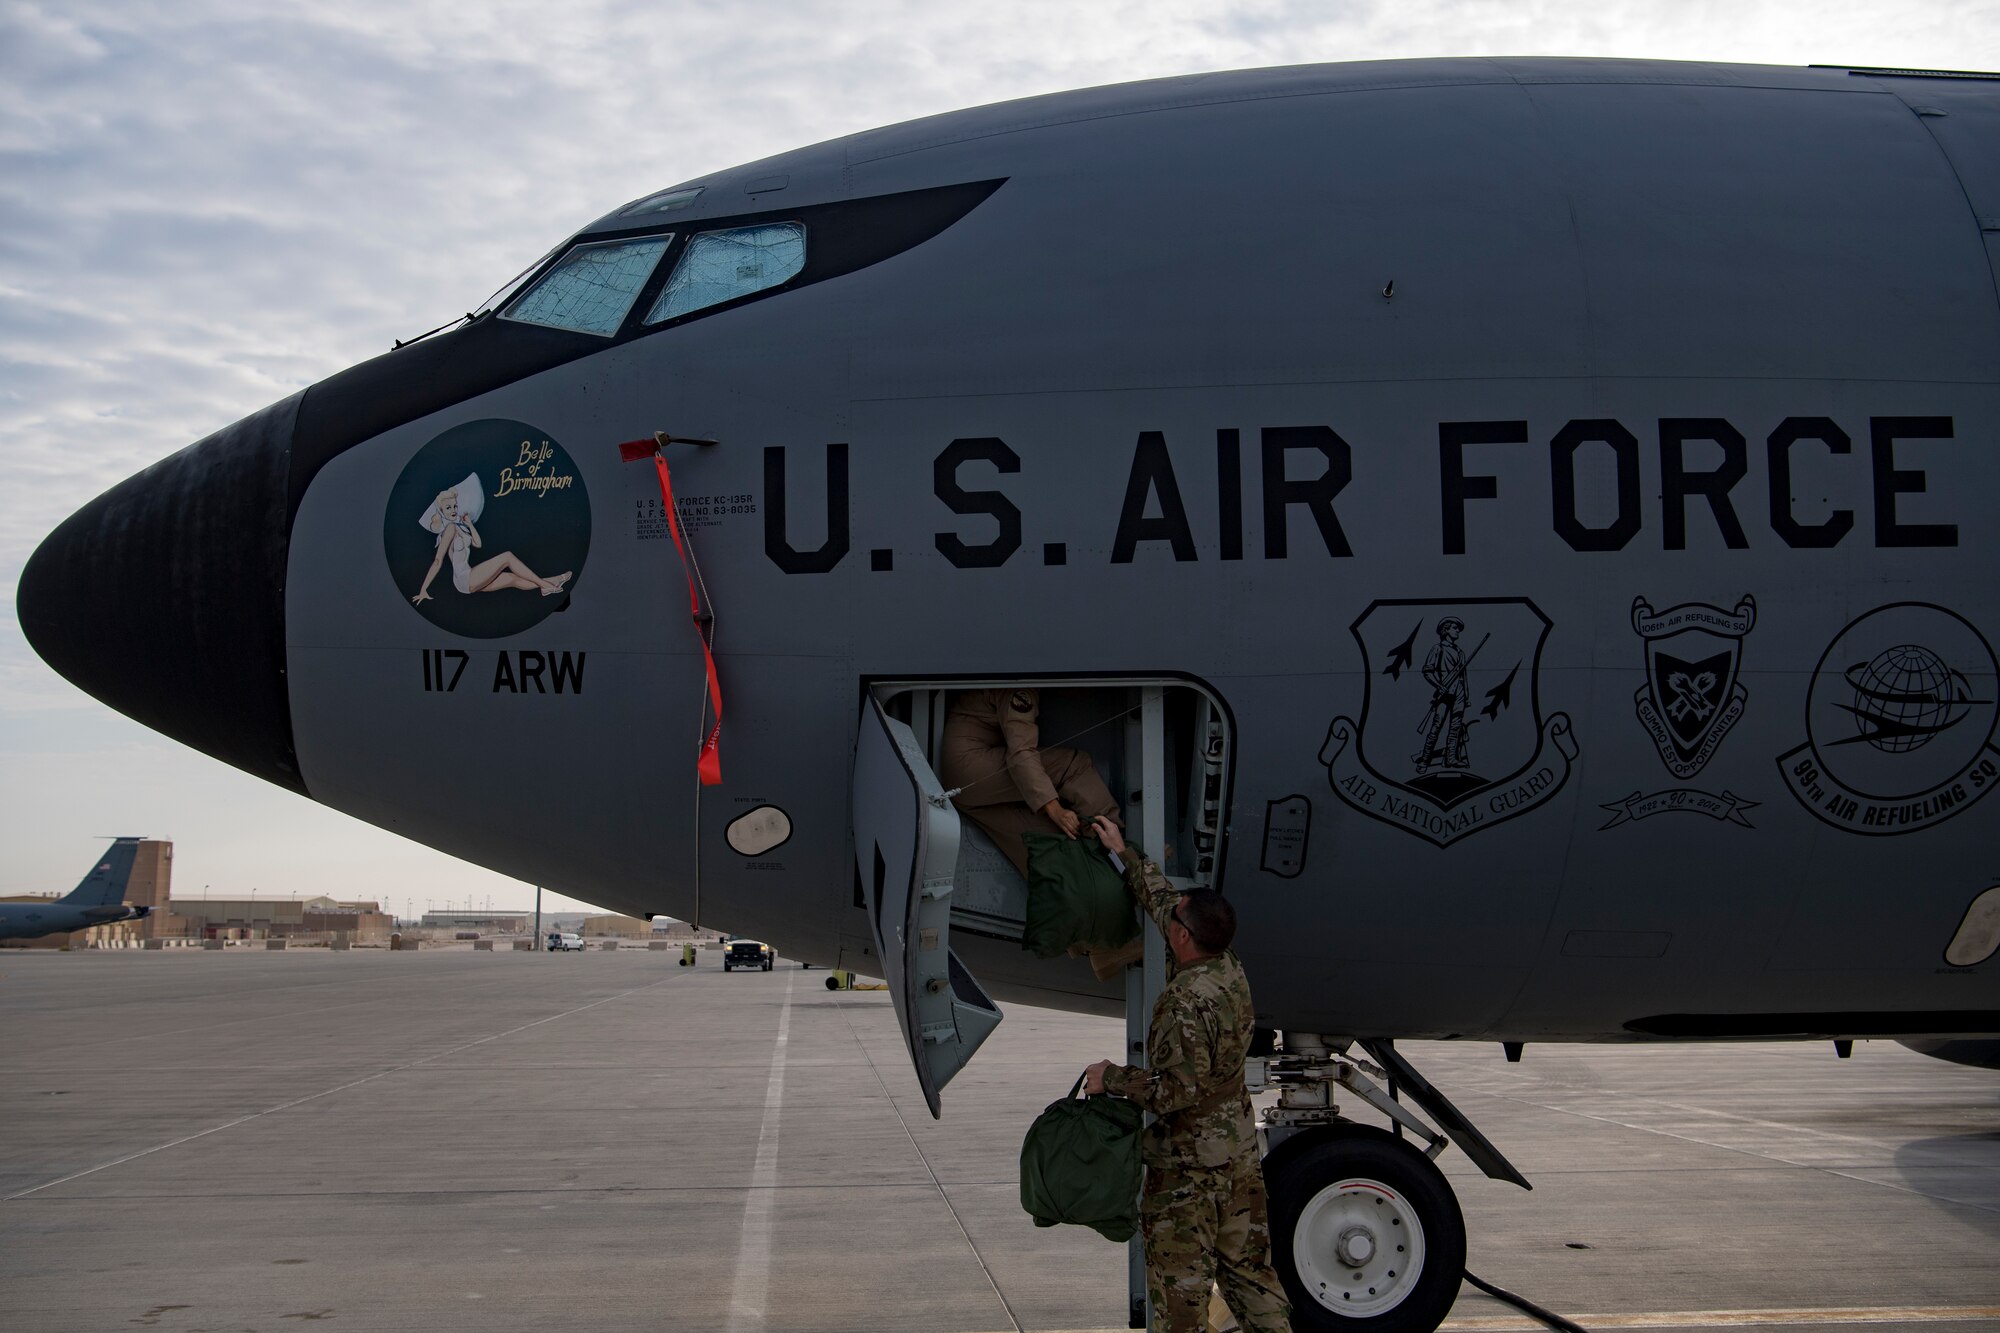 U.S. Air Force aircrew members load equipment into a U.S. Air Force KC-135 Stratotanker, at Al Udeid Air Base, Nov. 20, 2019.